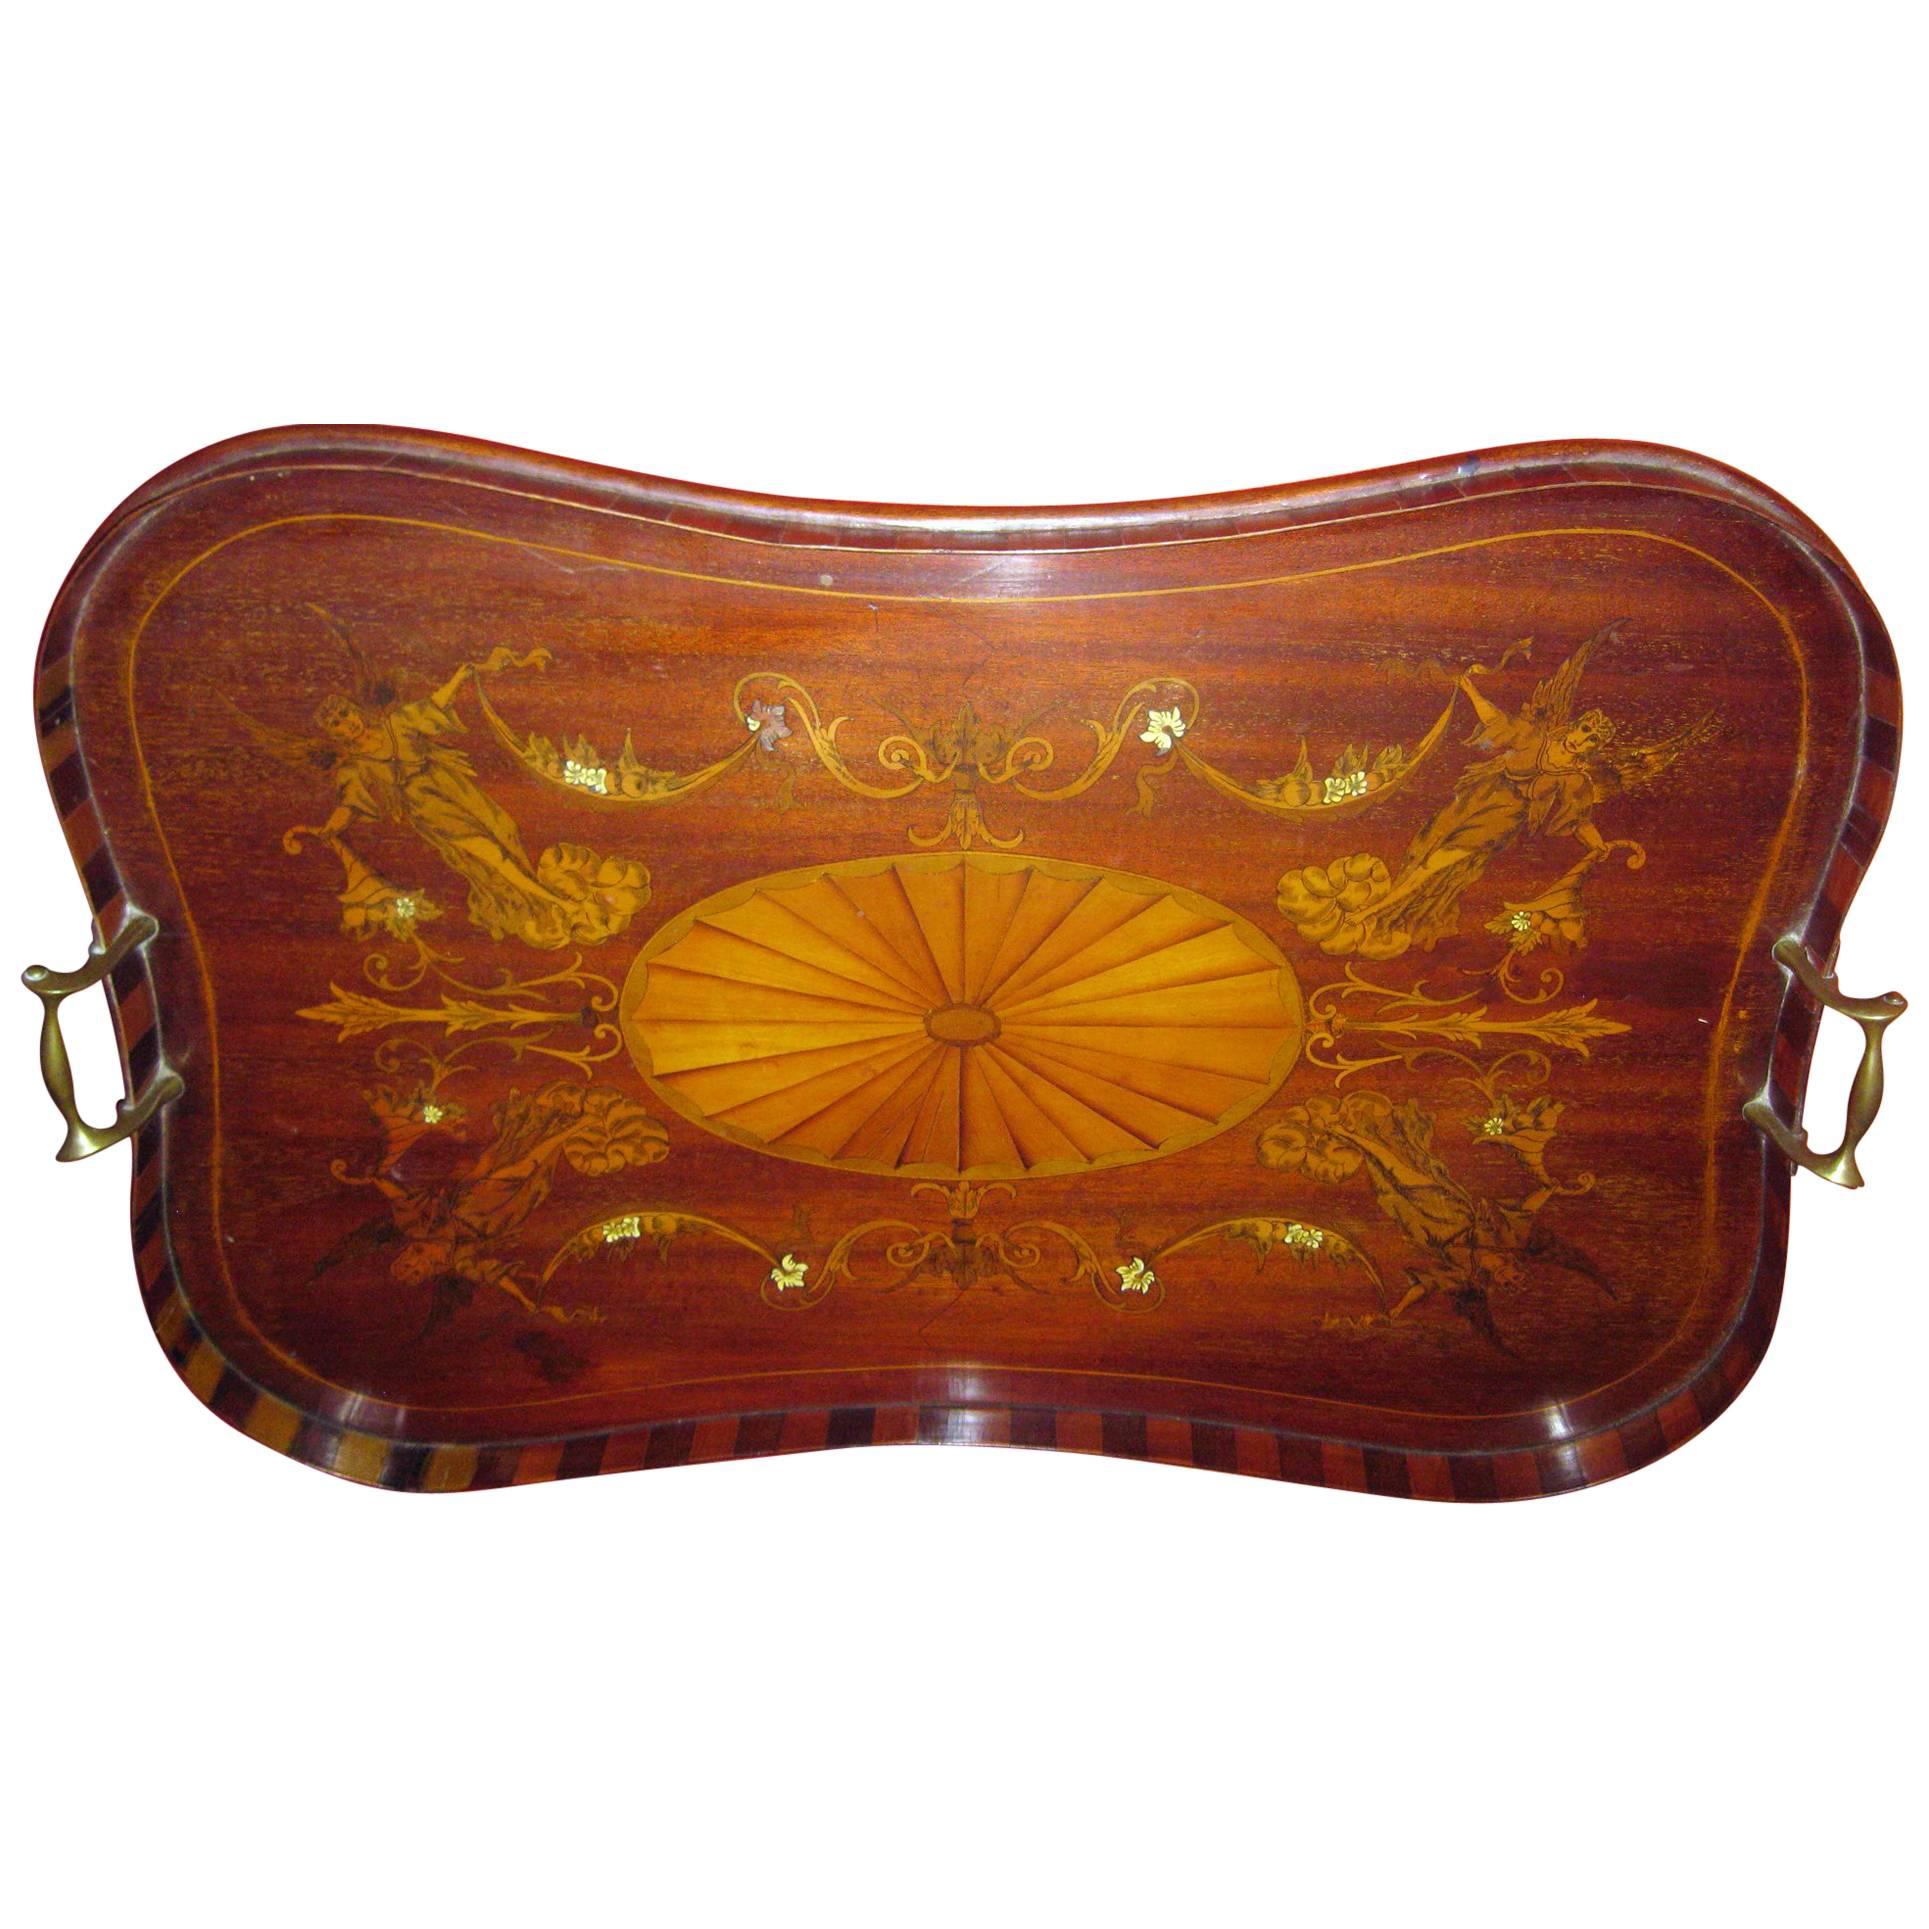 19th century English Mahogany Butler's Tray with Fruitwood Inlay